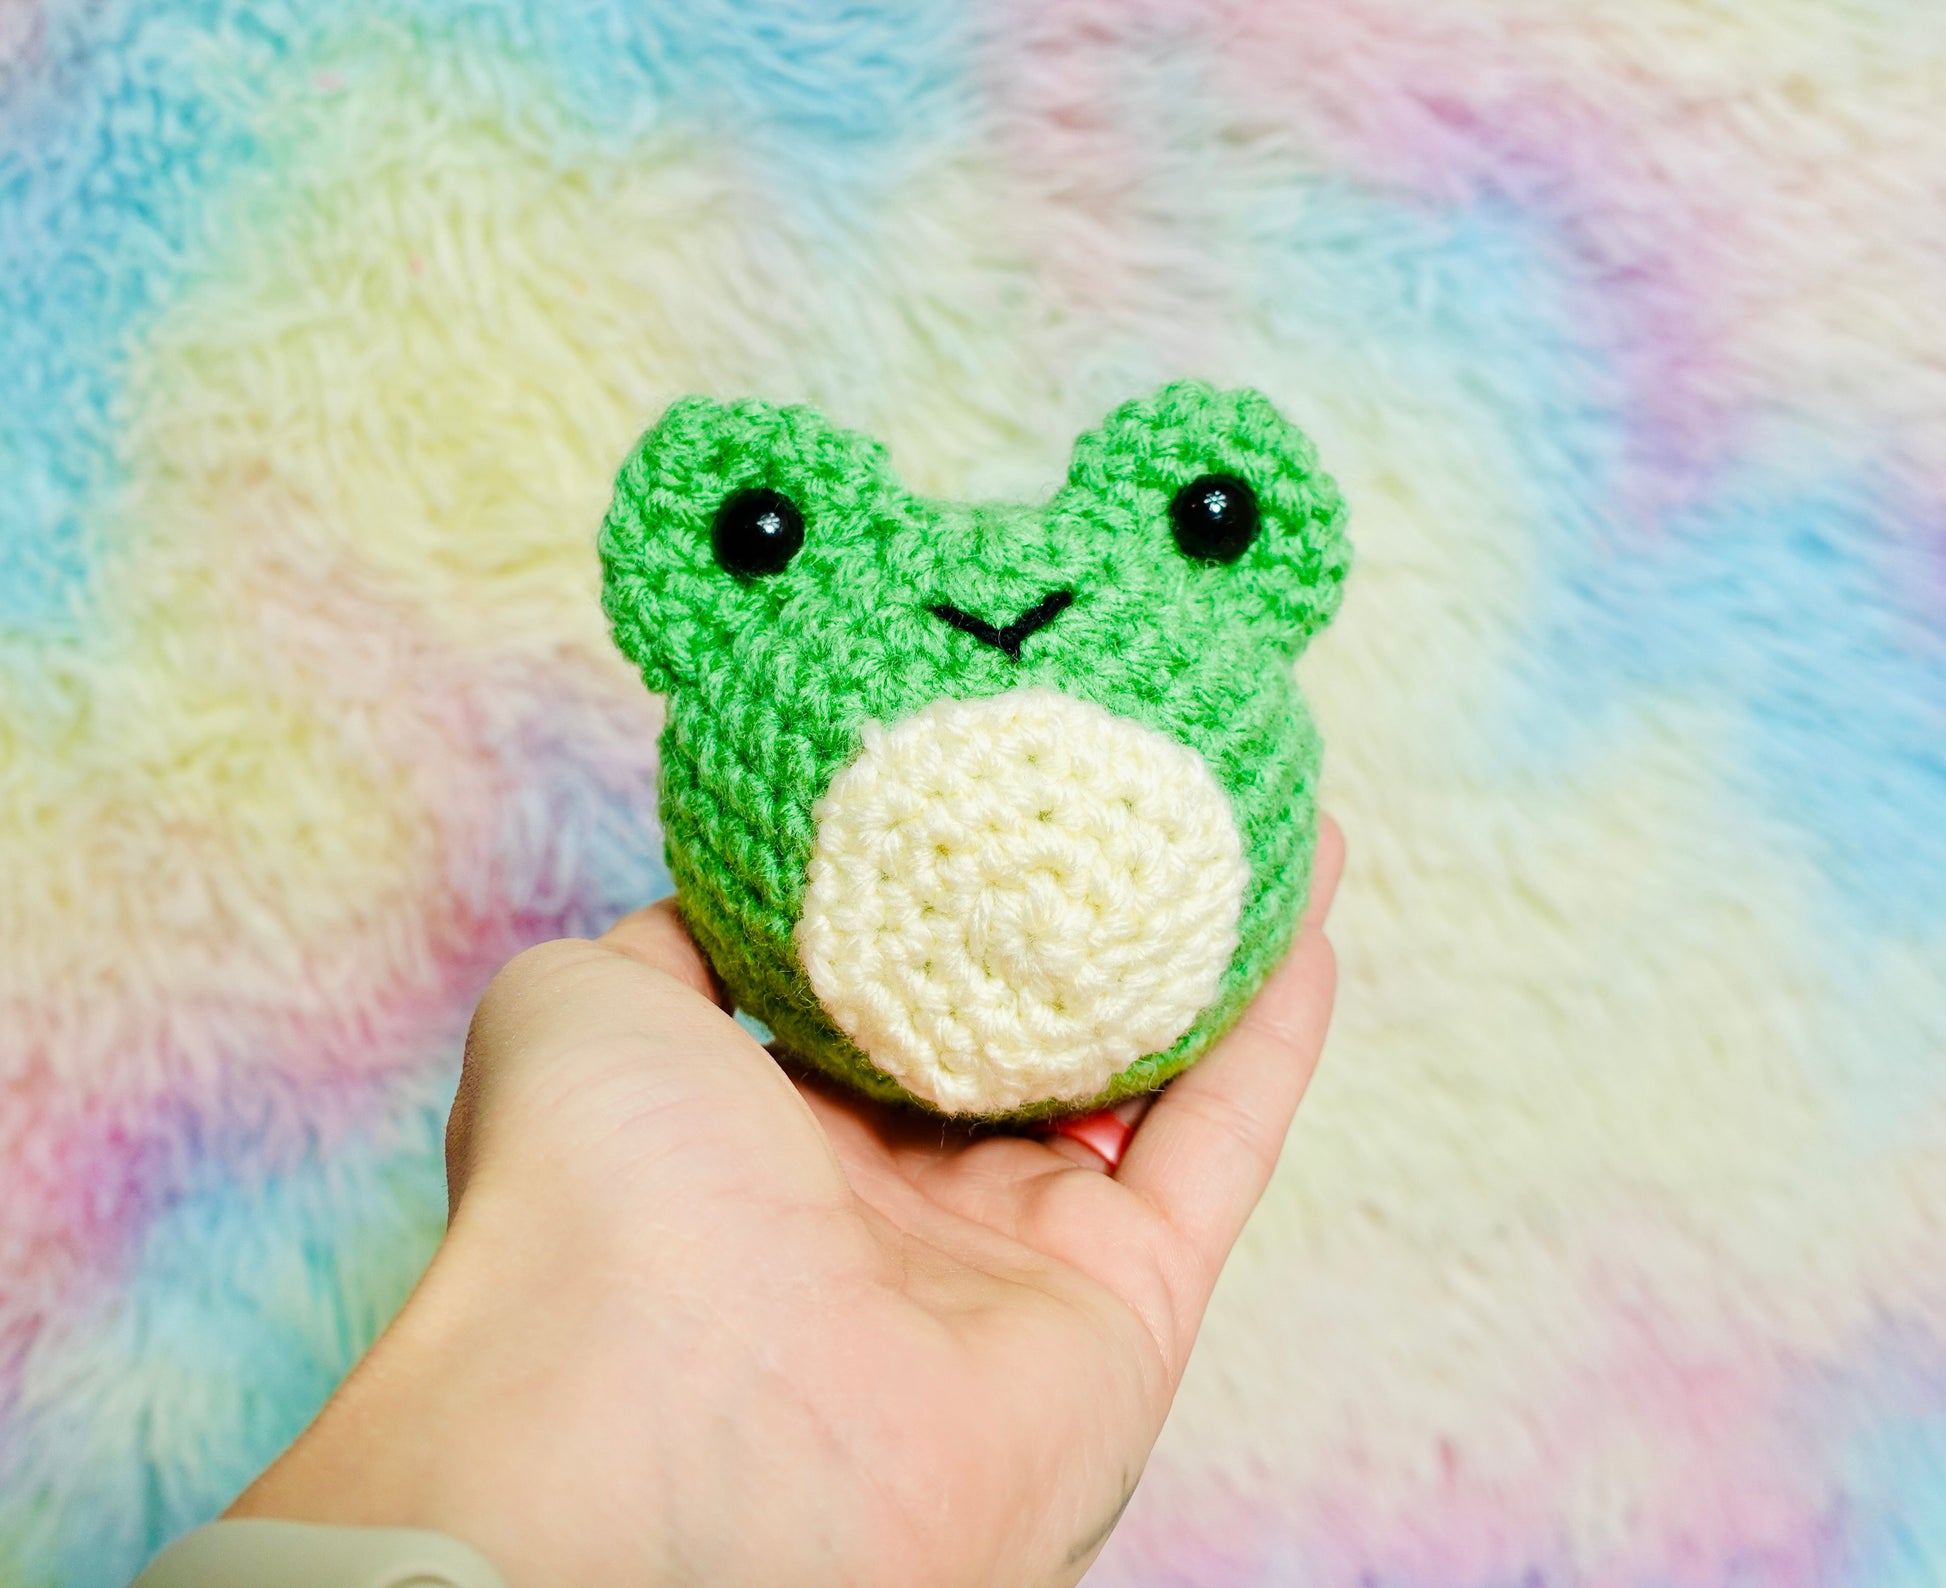 crochet kits for beginners｜TikTok Search